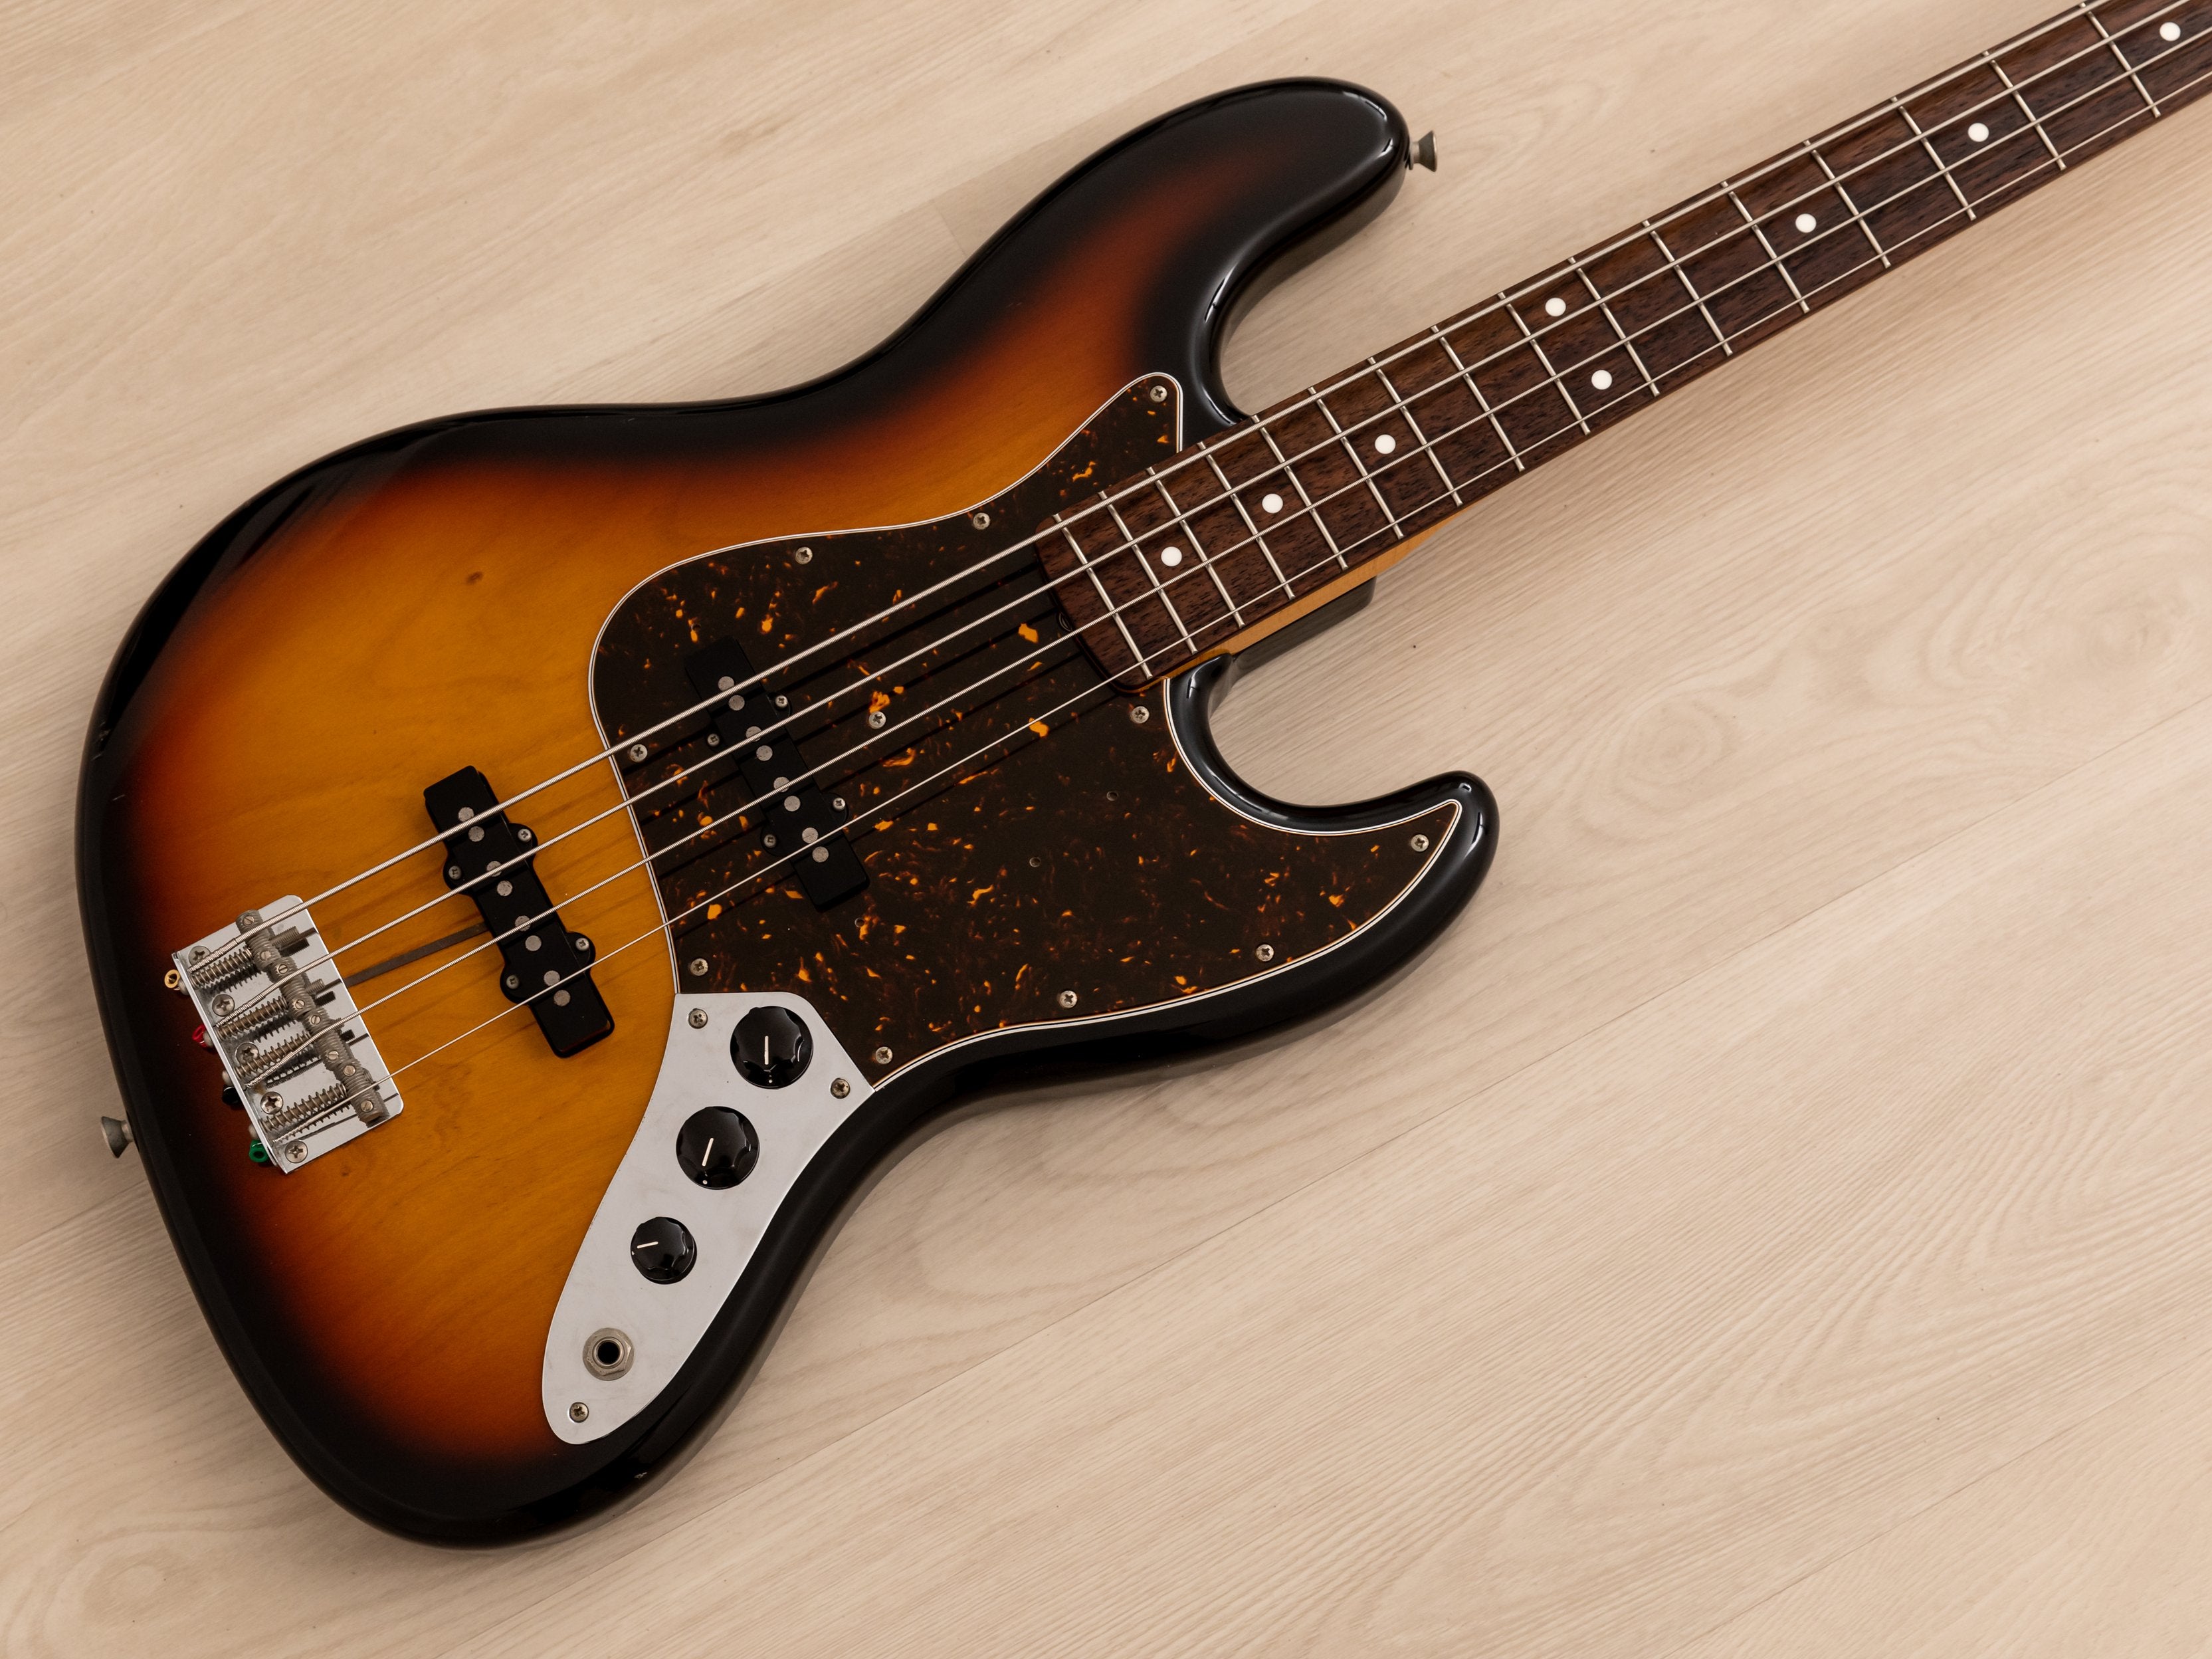 2014 Fender Jazz Bass '62 Vintage Reissue JB62/VSP, Sunburst Nitro Lacquer w/ USA Pickups, Japan MIJ